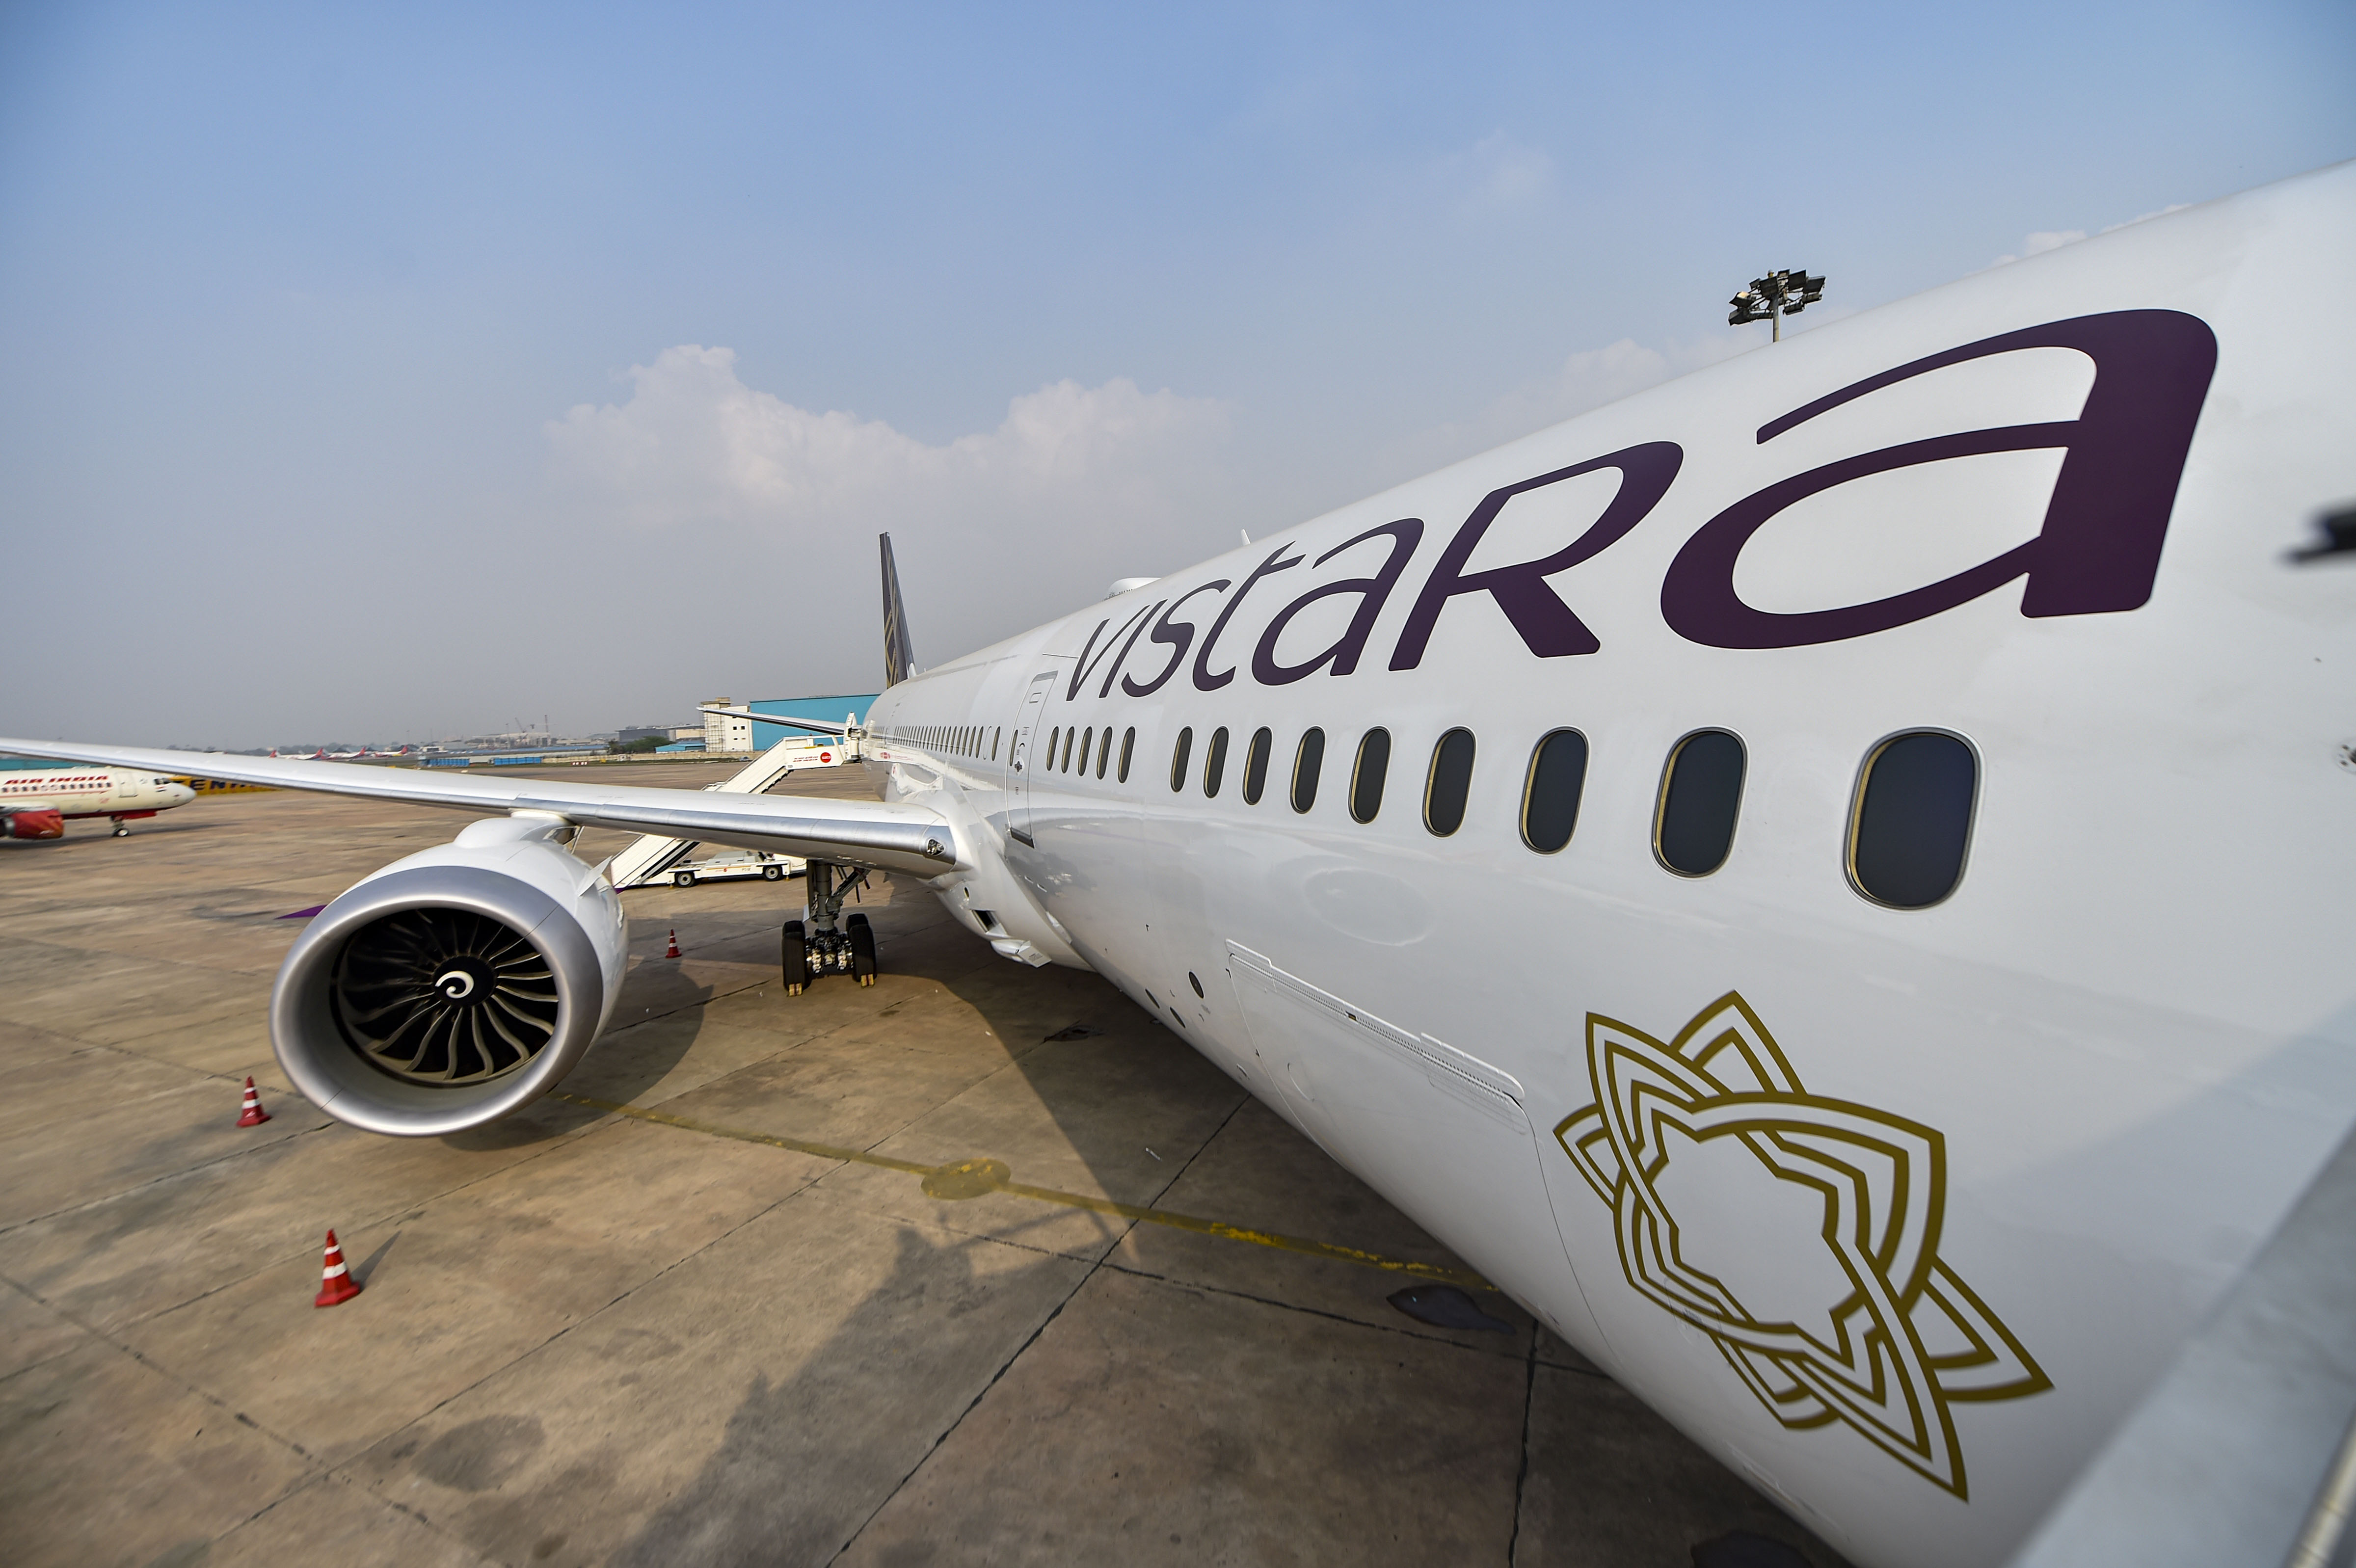 Vistara aircraft engine fails after landing at Delhi airport, passengers safe